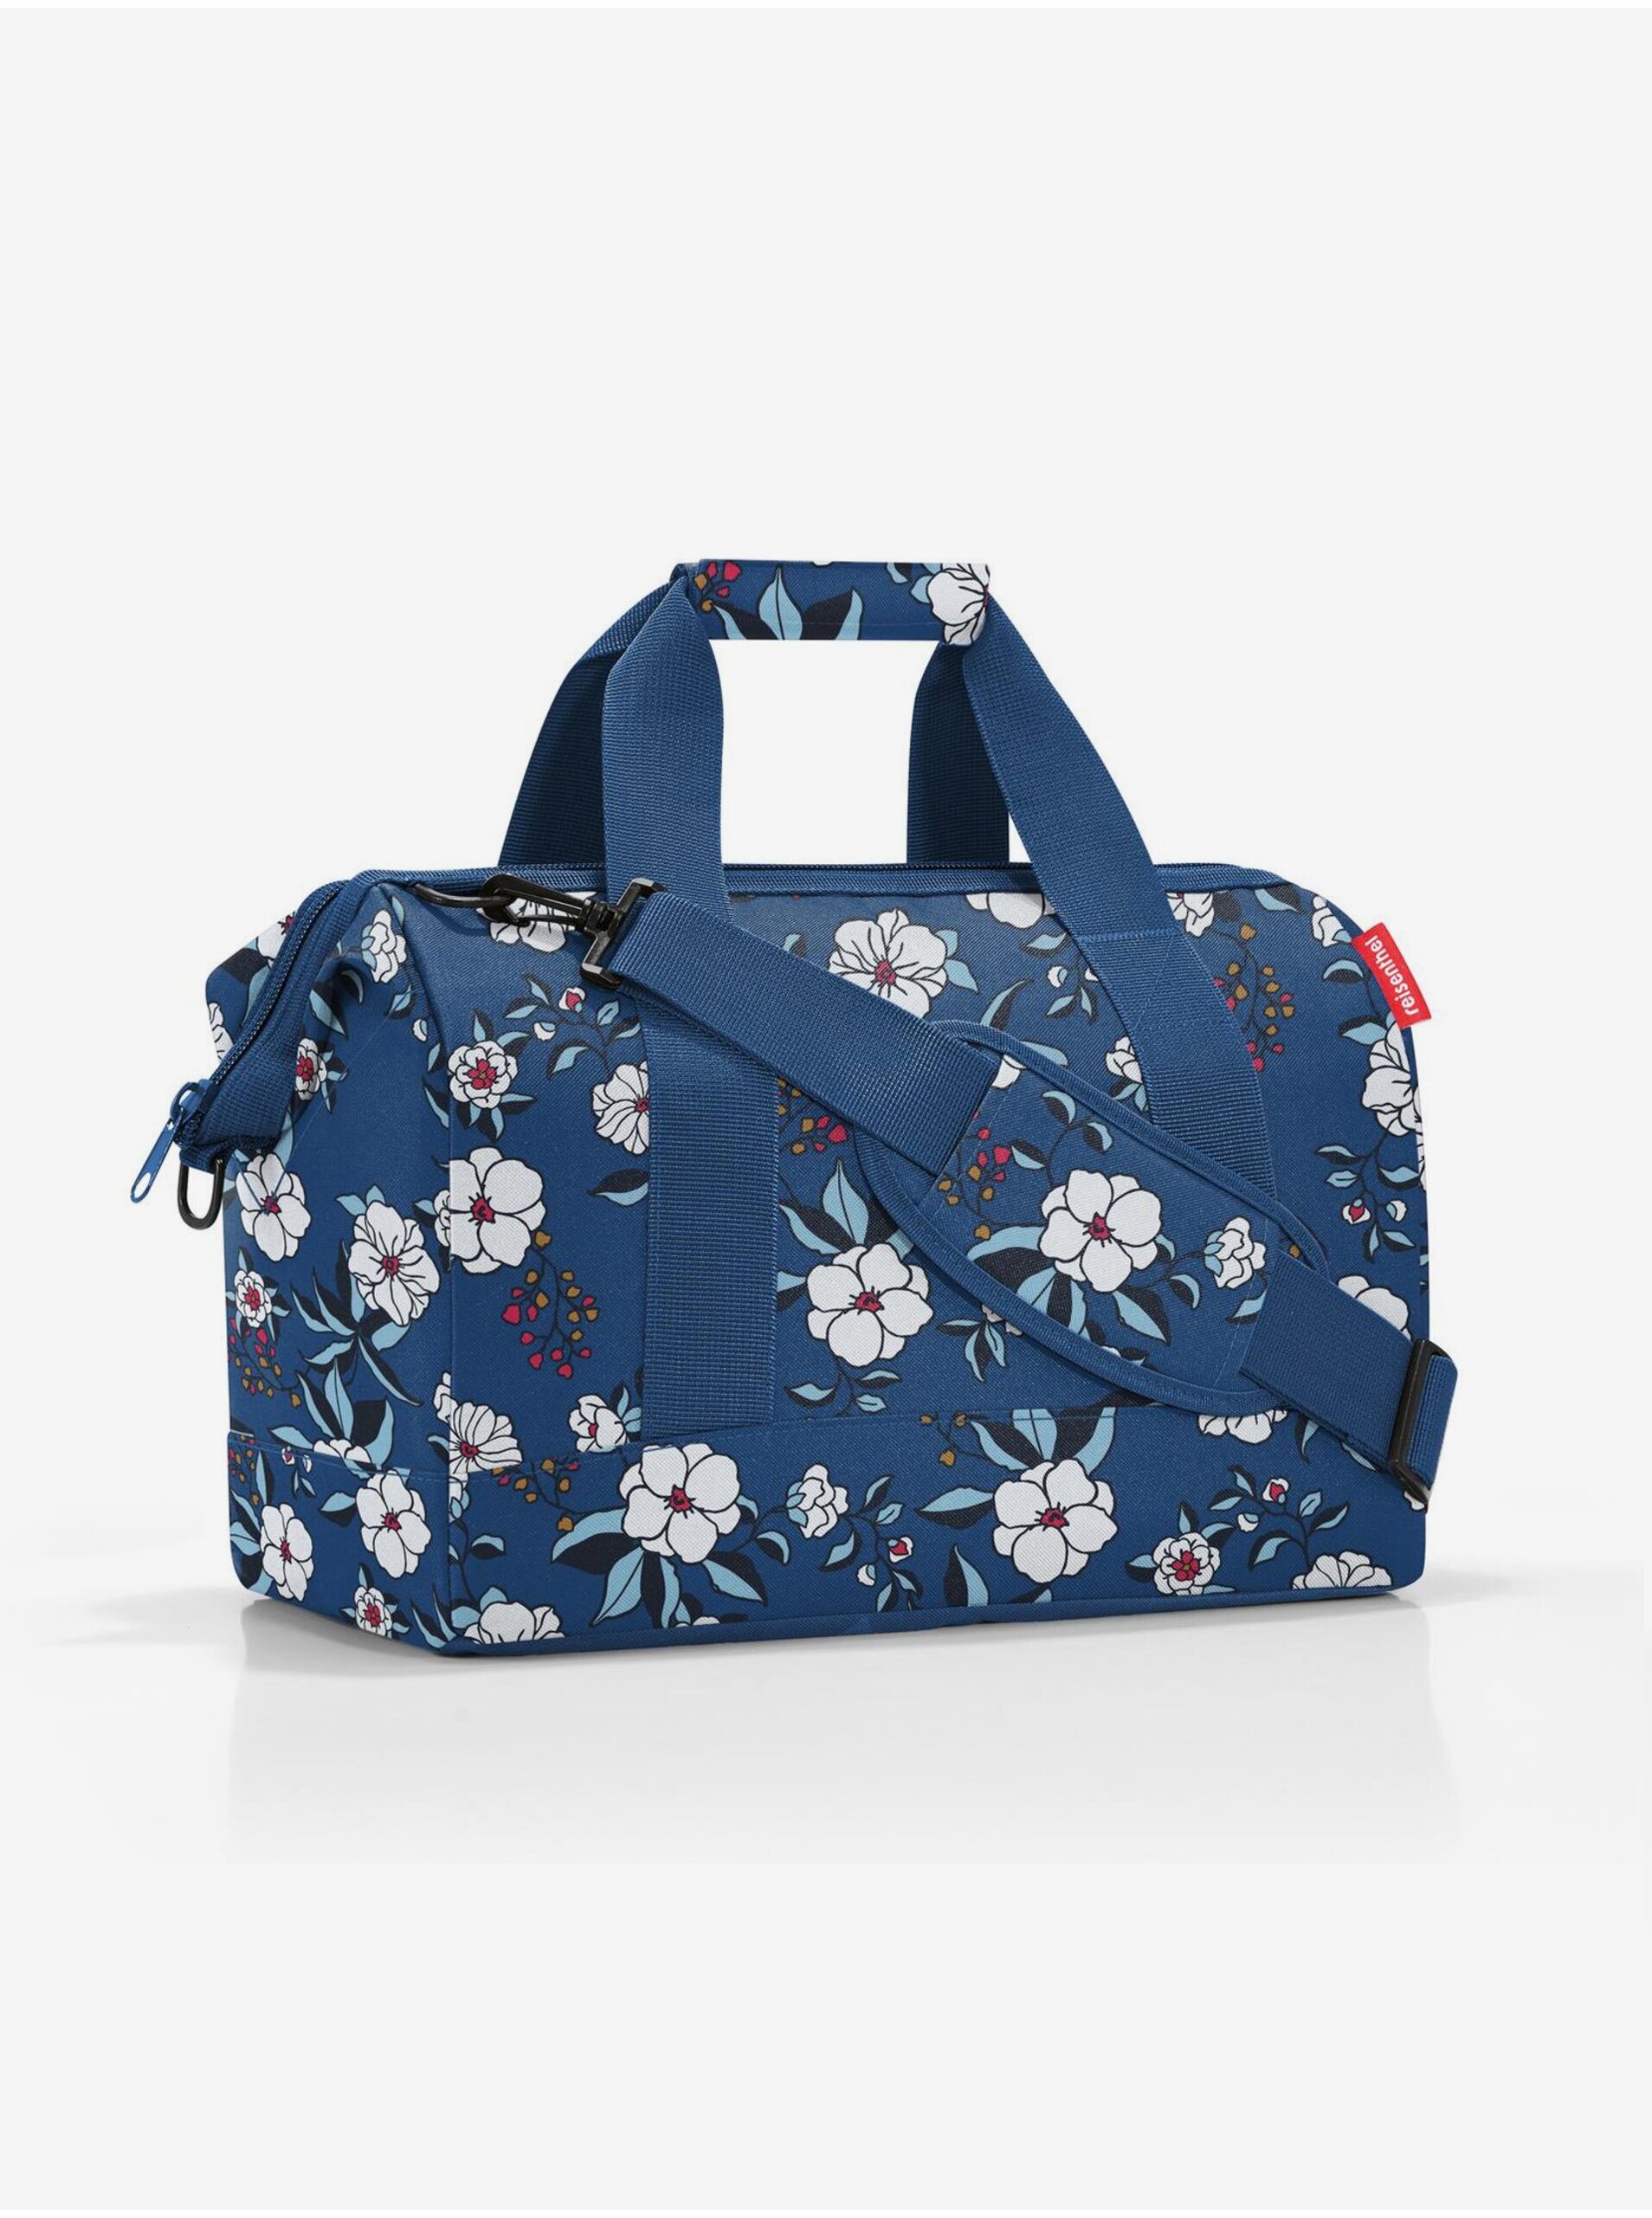 Lacno Modrá dámska kvetovaná cestovná taška Reisenthel Allrounder M Garden